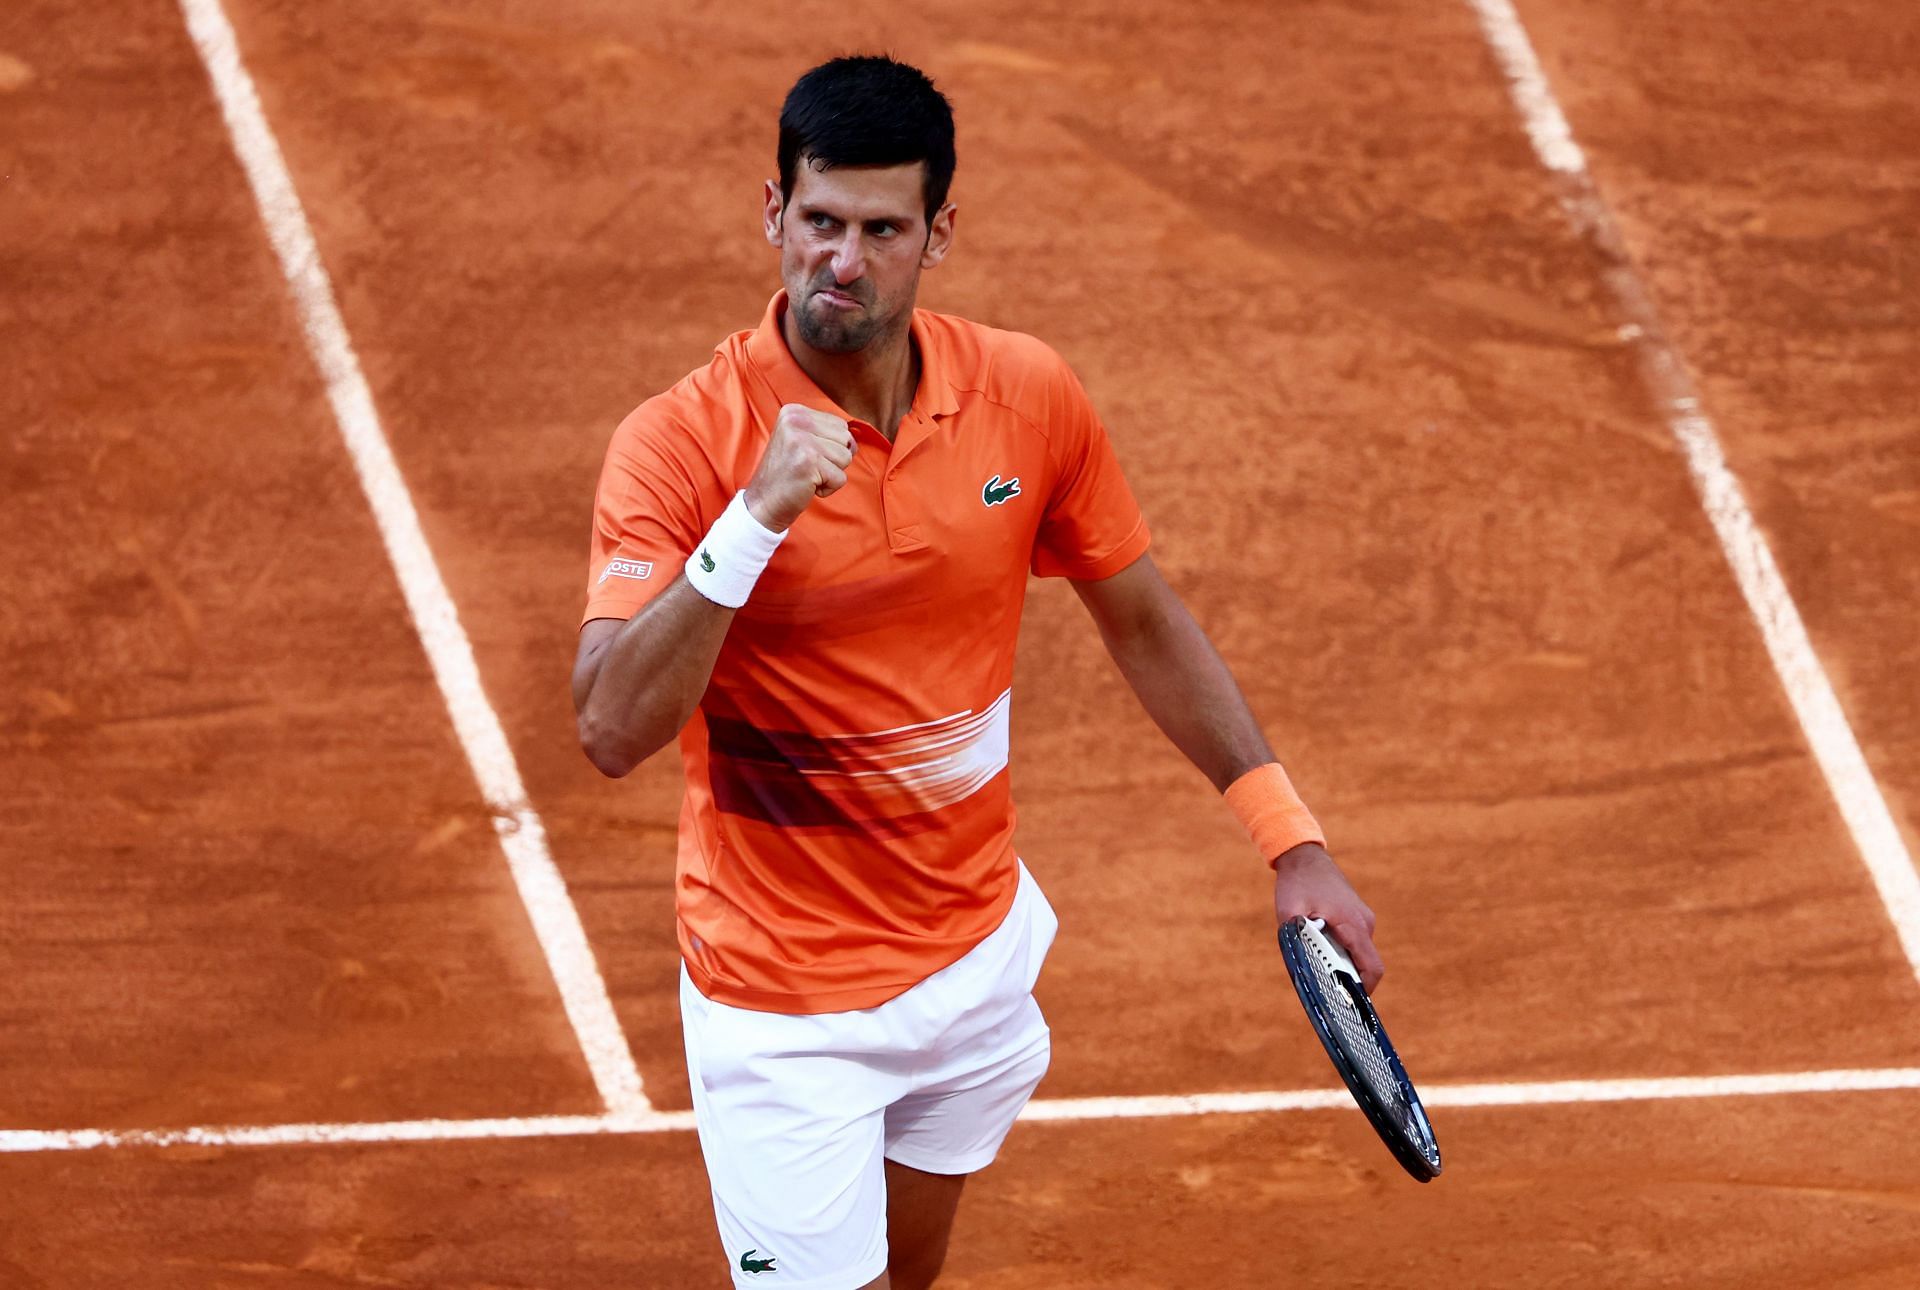 Novak Djokovics next match Opponent, venue, live streaming, TV channel and schedule Italian Open 2022 2nd Round